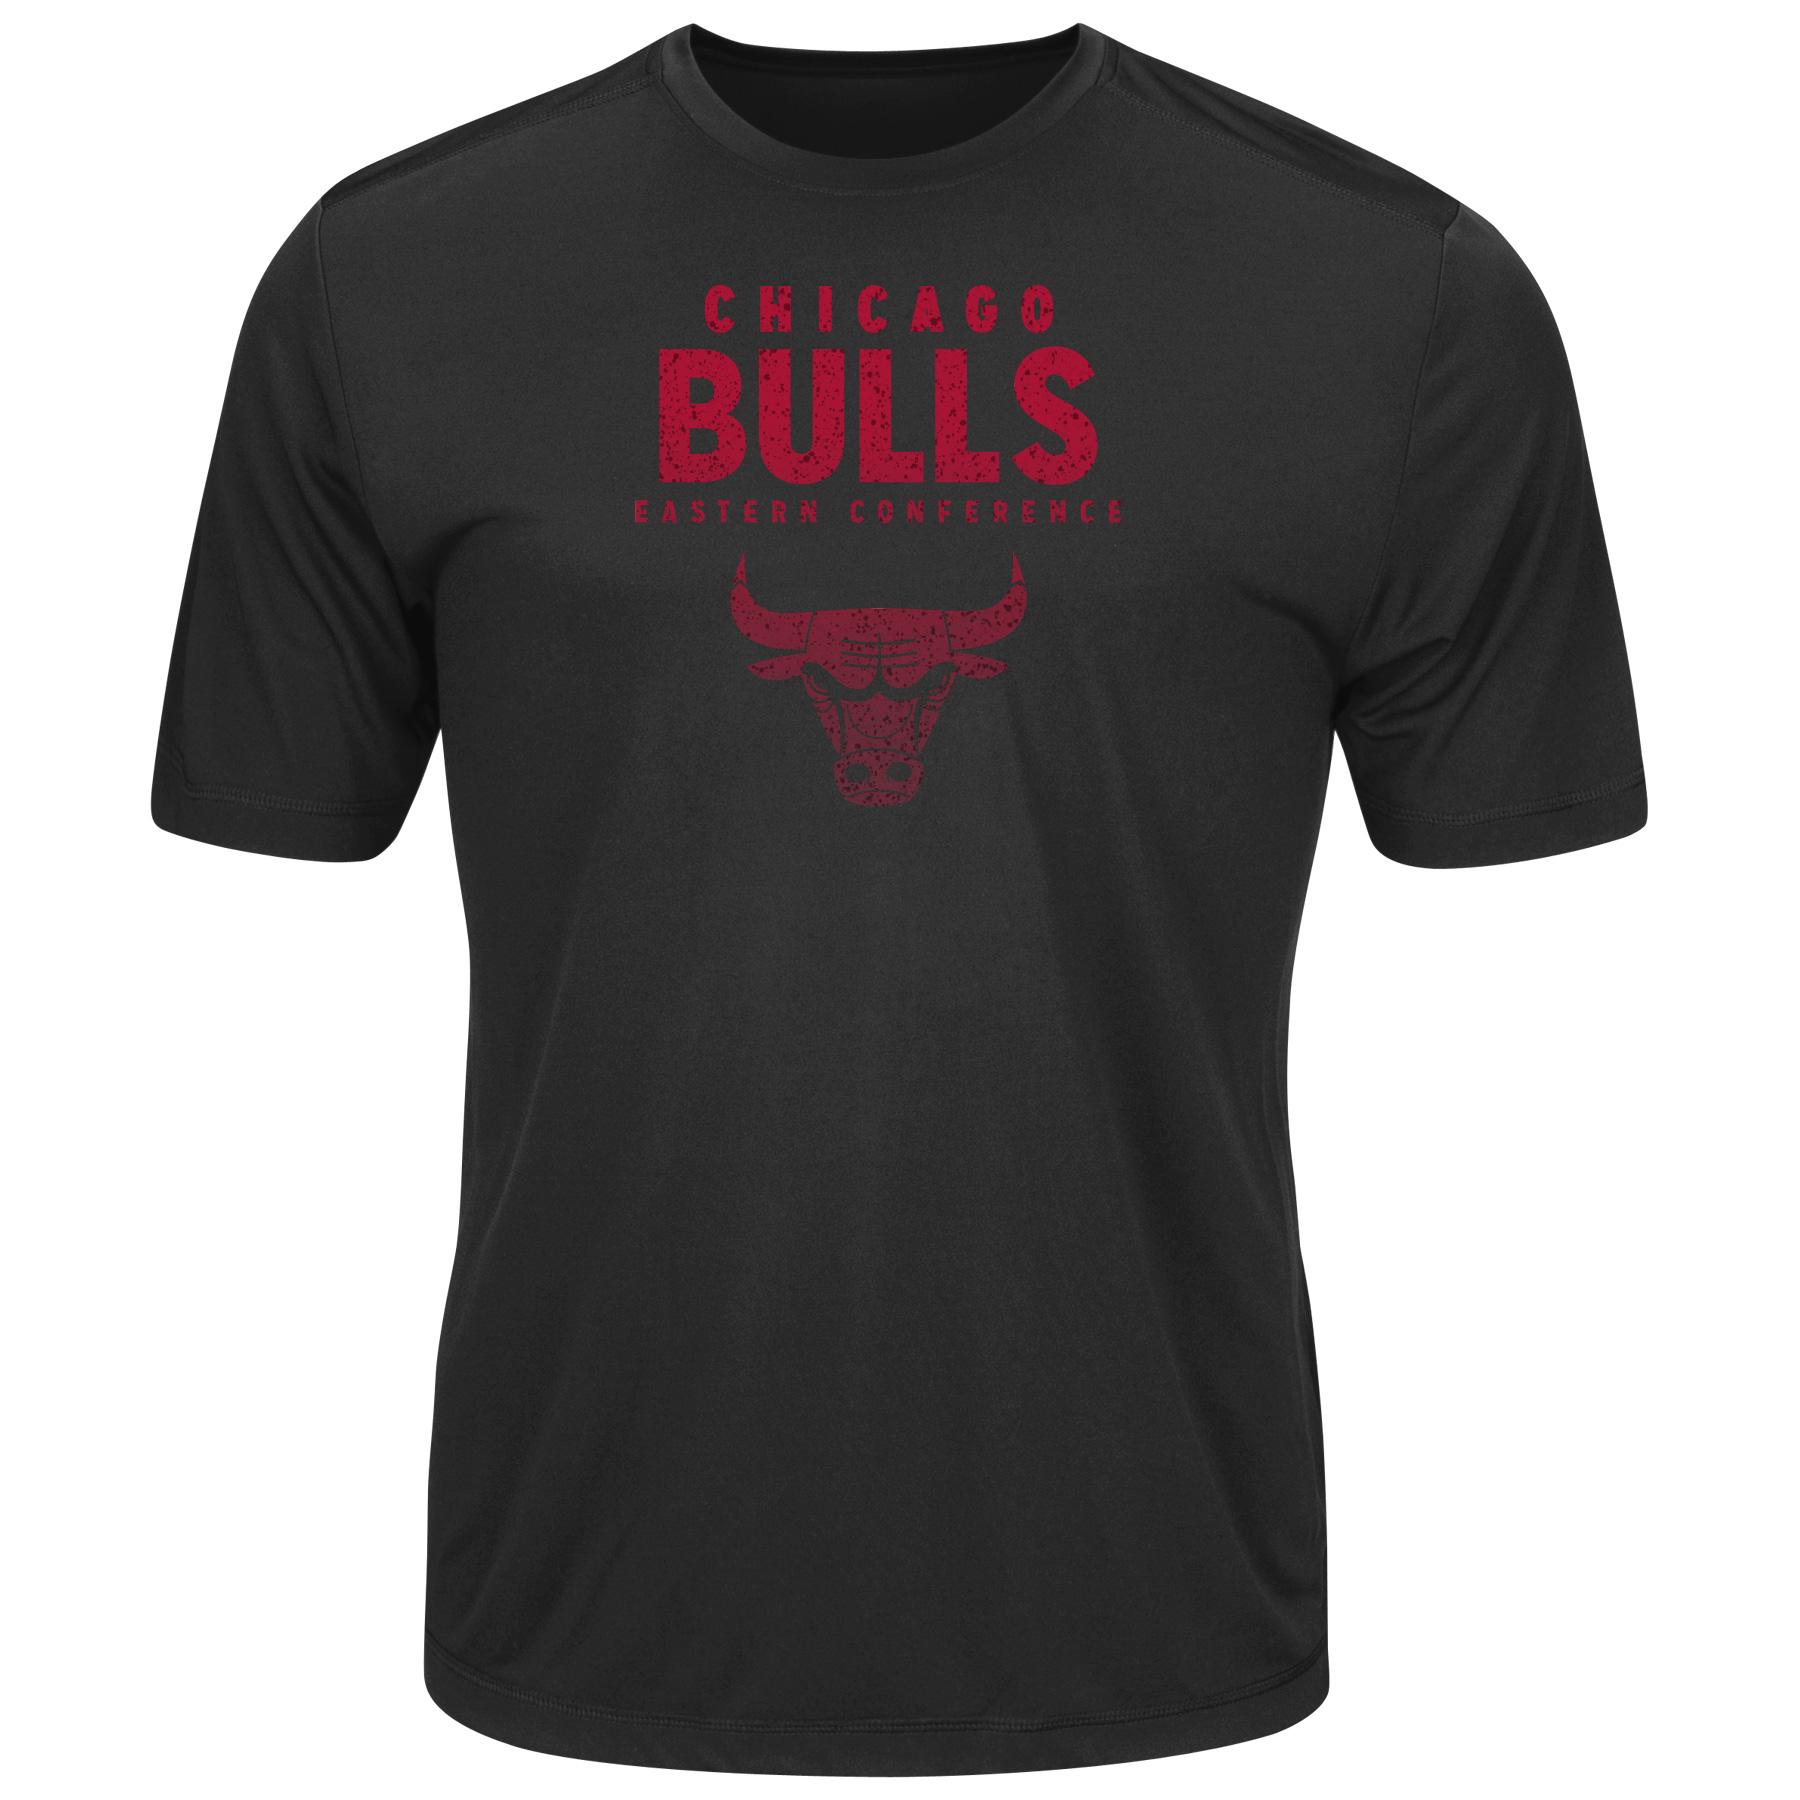 NBA(CANONICAL) Men's Graphic T-Shirt - Chicago Bulls